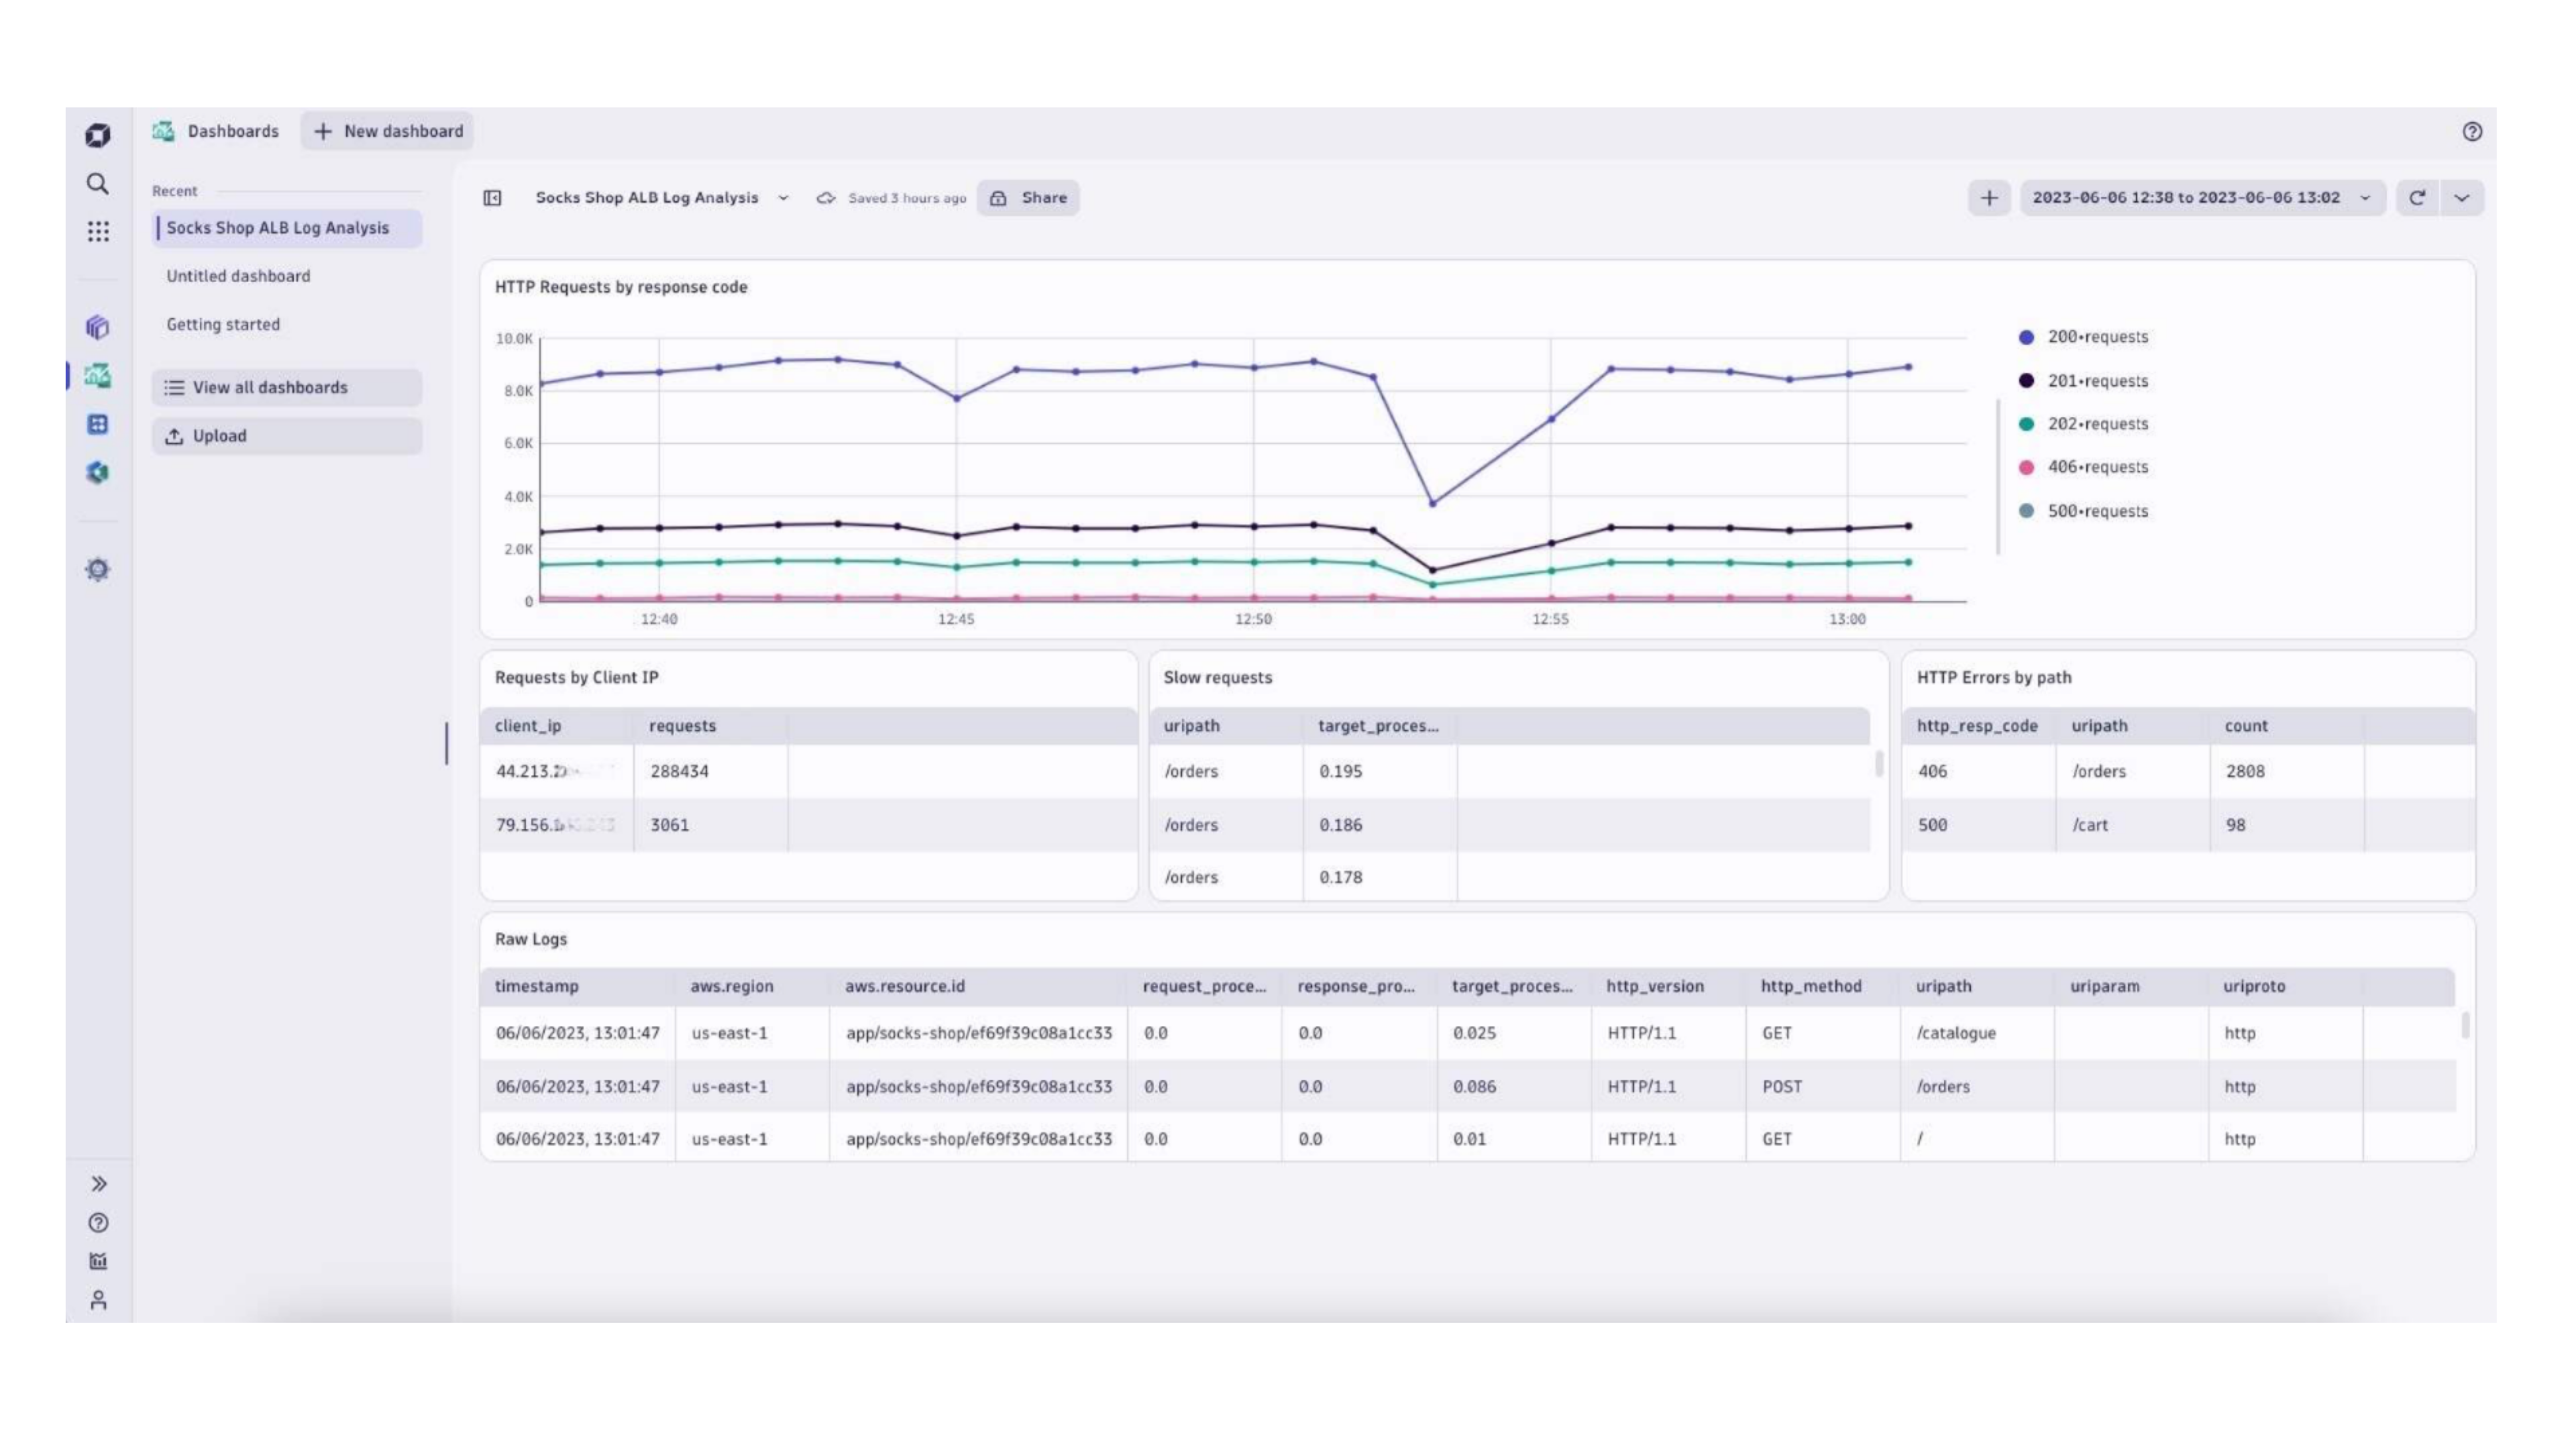 Use Notebooks on the Dynatrace platform to analyze logs from AWS Application Load Balancer.